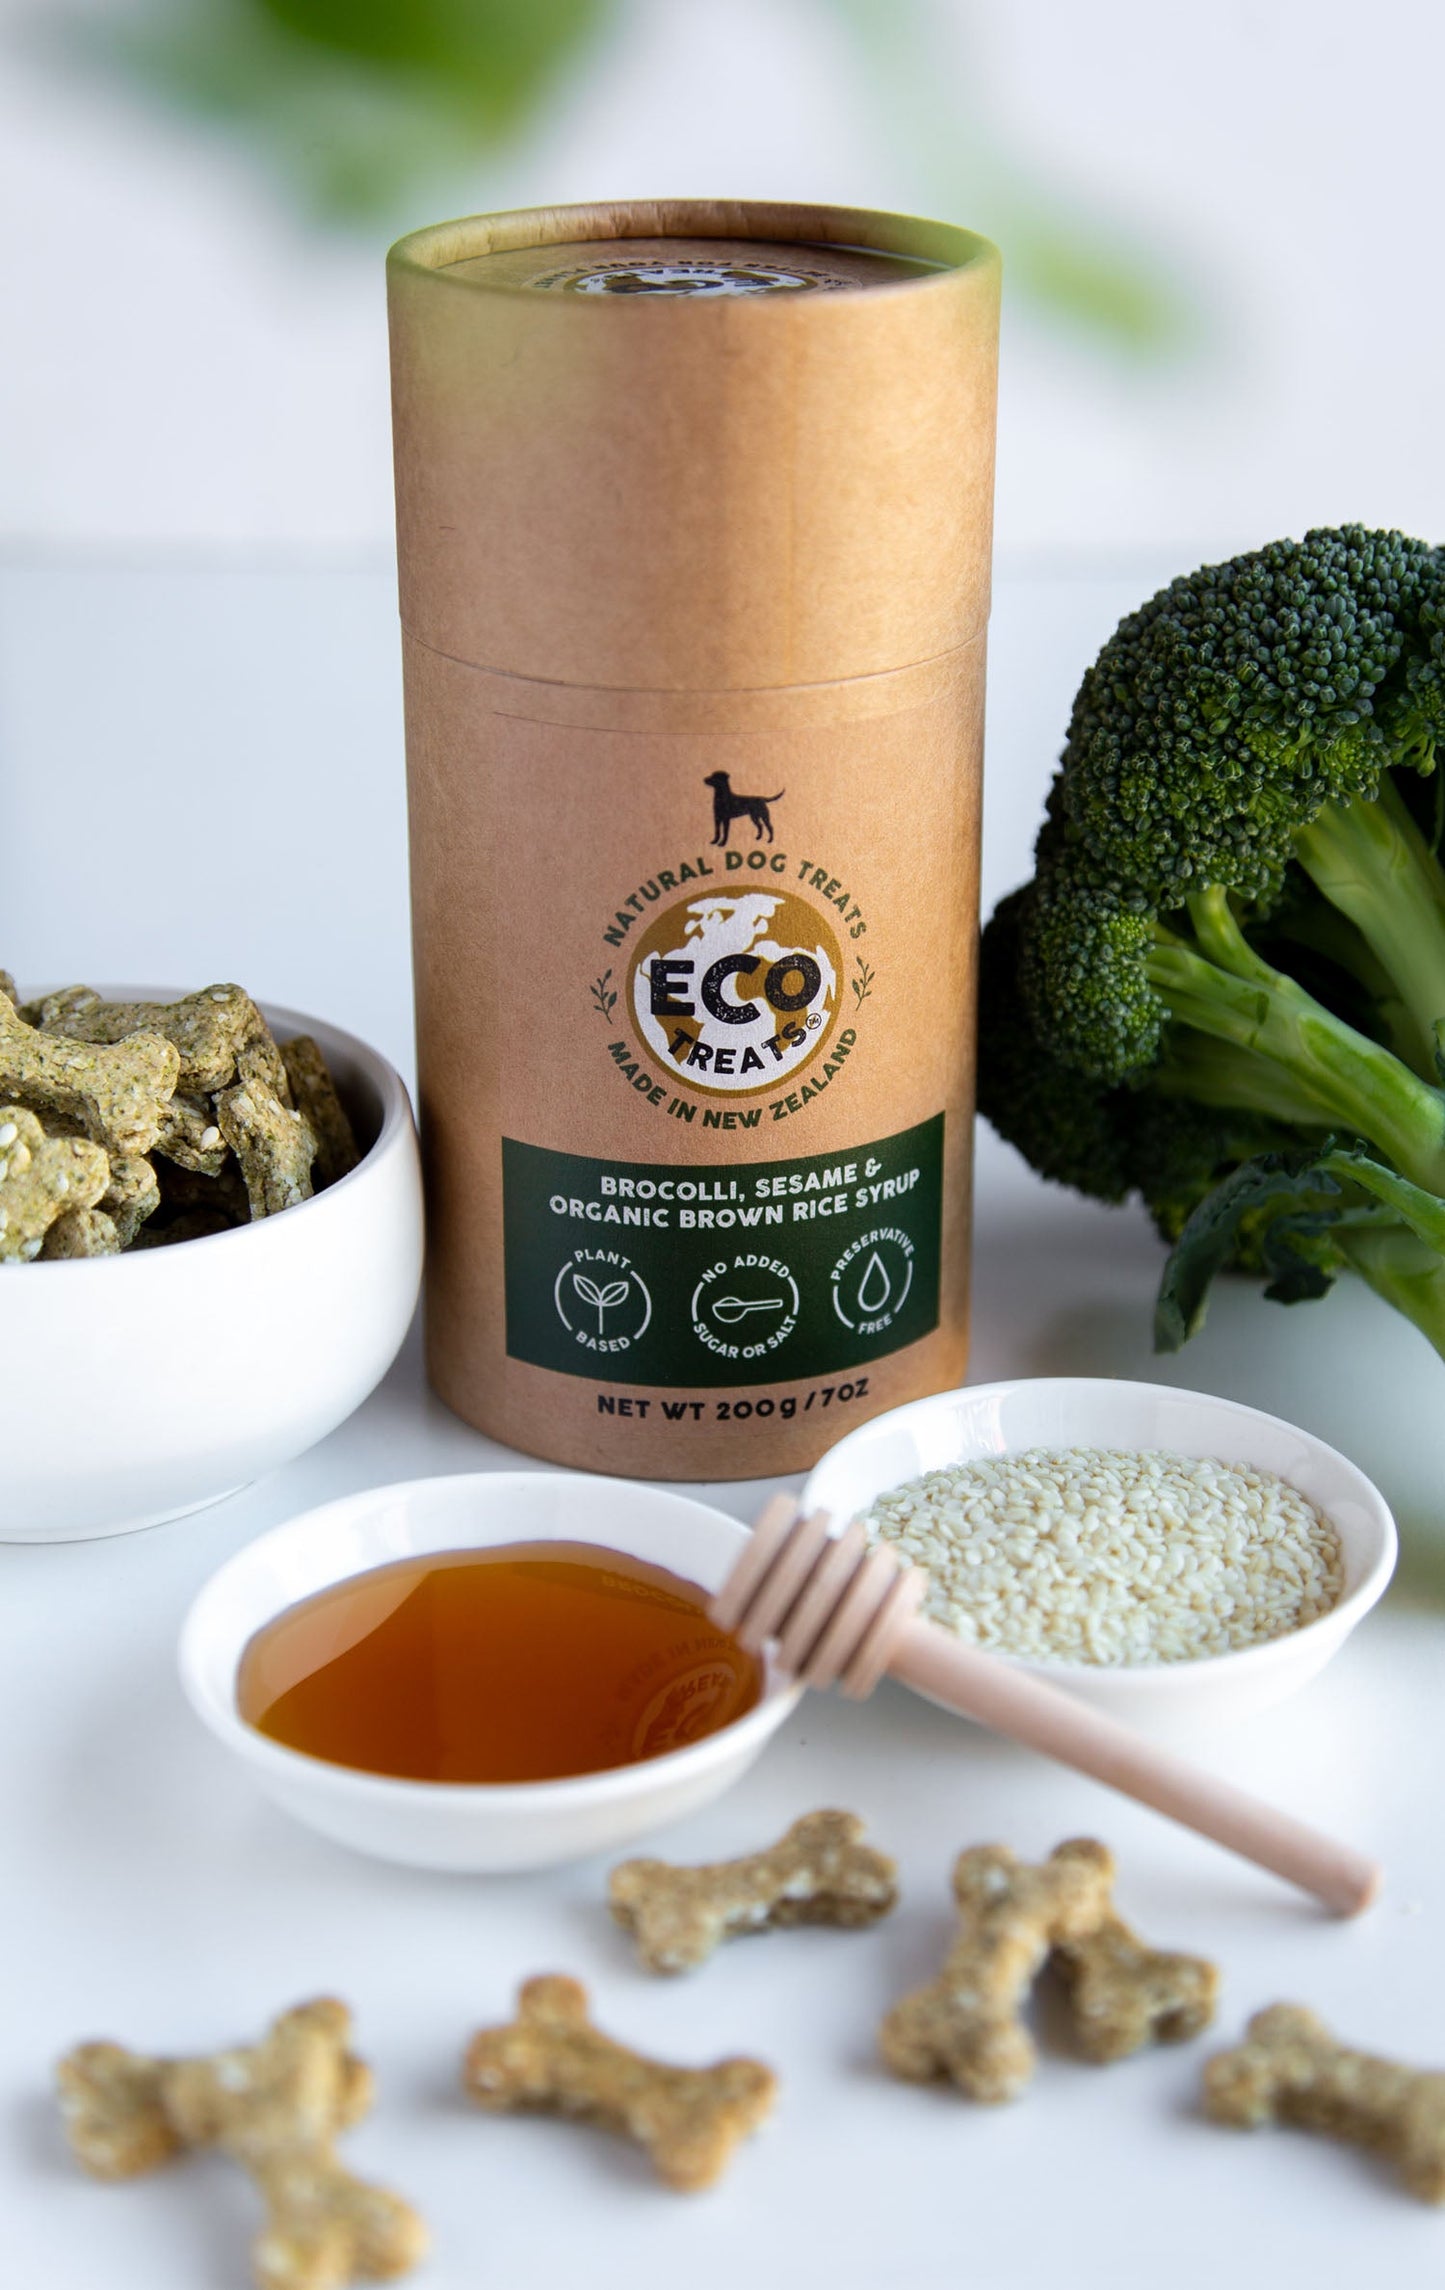 Broccoli, Sesame & Organic Brown Rice Syrup - 犬用ビスケット